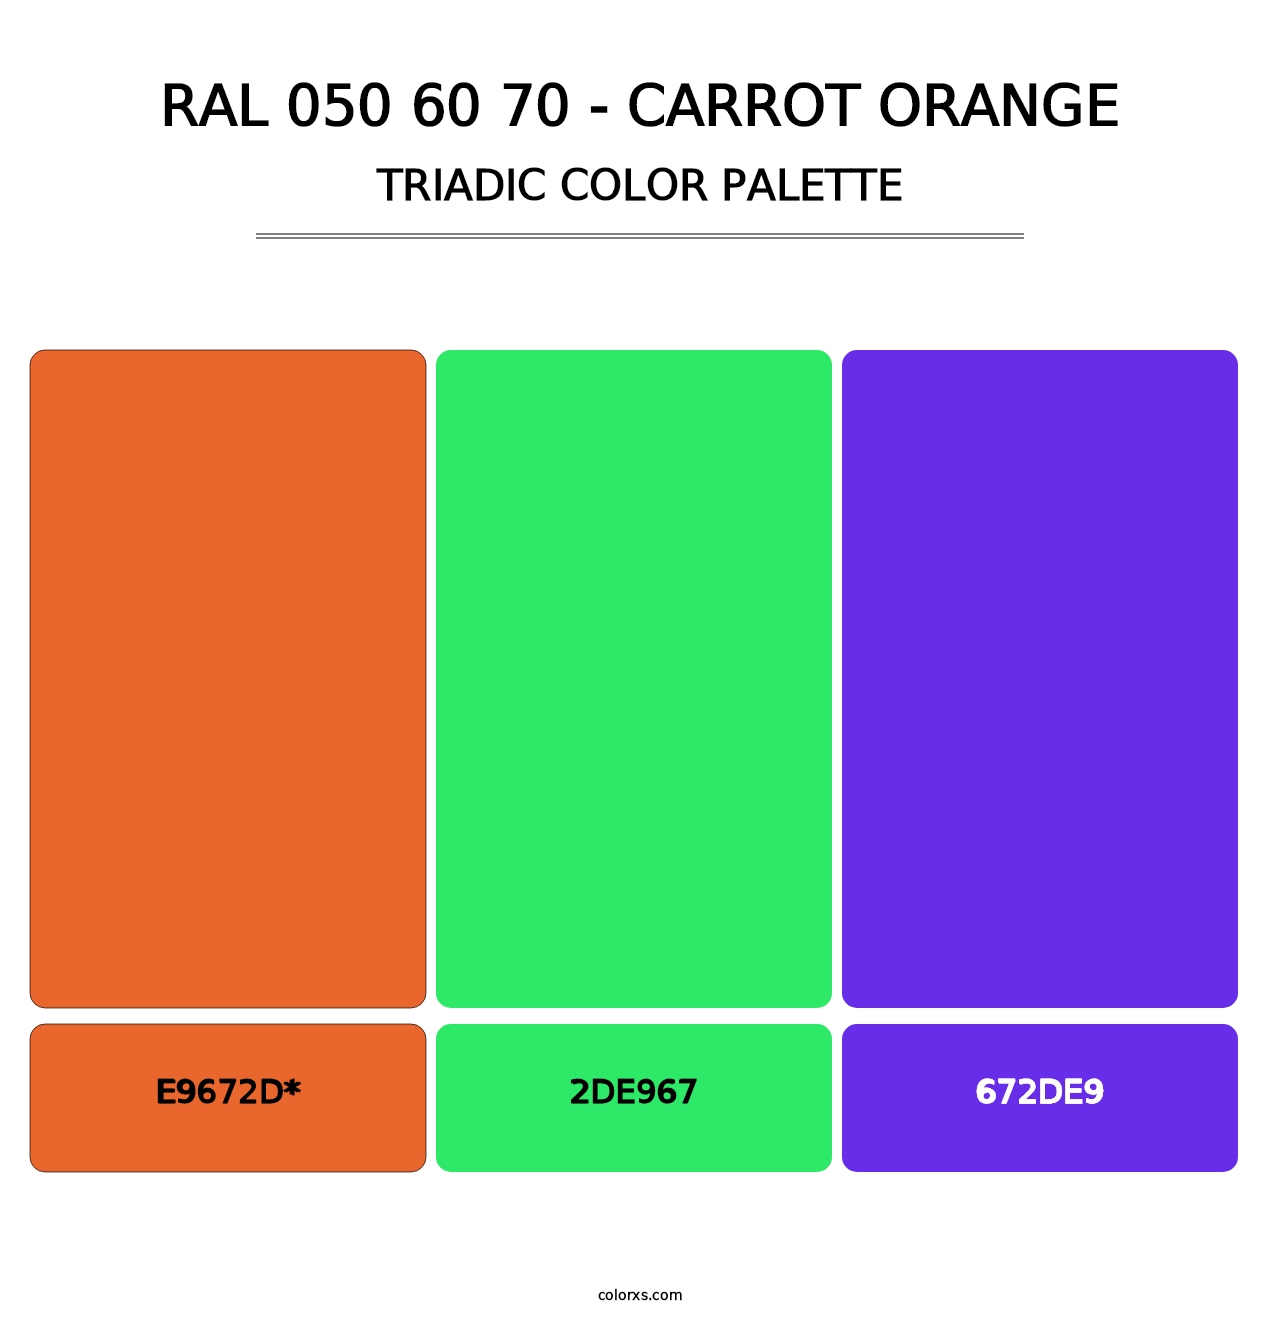 RAL 050 60 70 - Carrot Orange - Triadic Color Palette